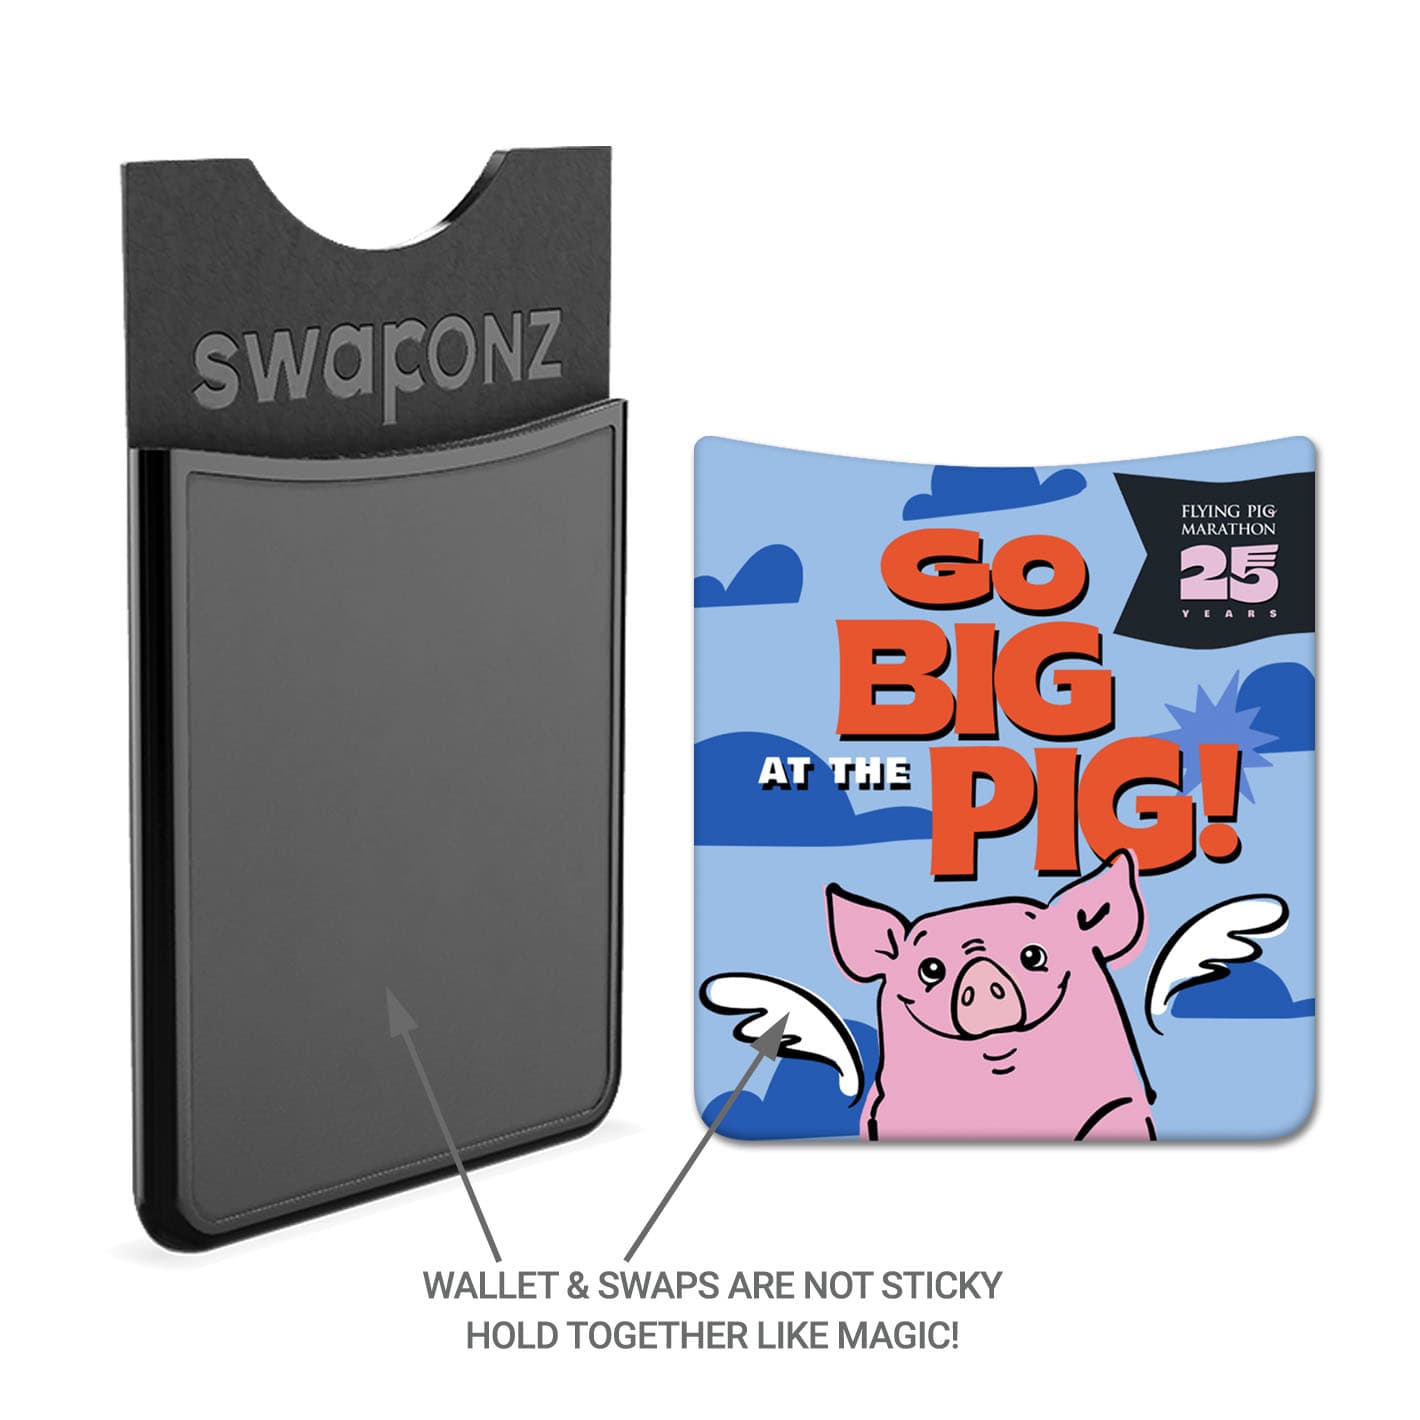 Phone Wallet Set - Flying Pig Marathon 25th 2